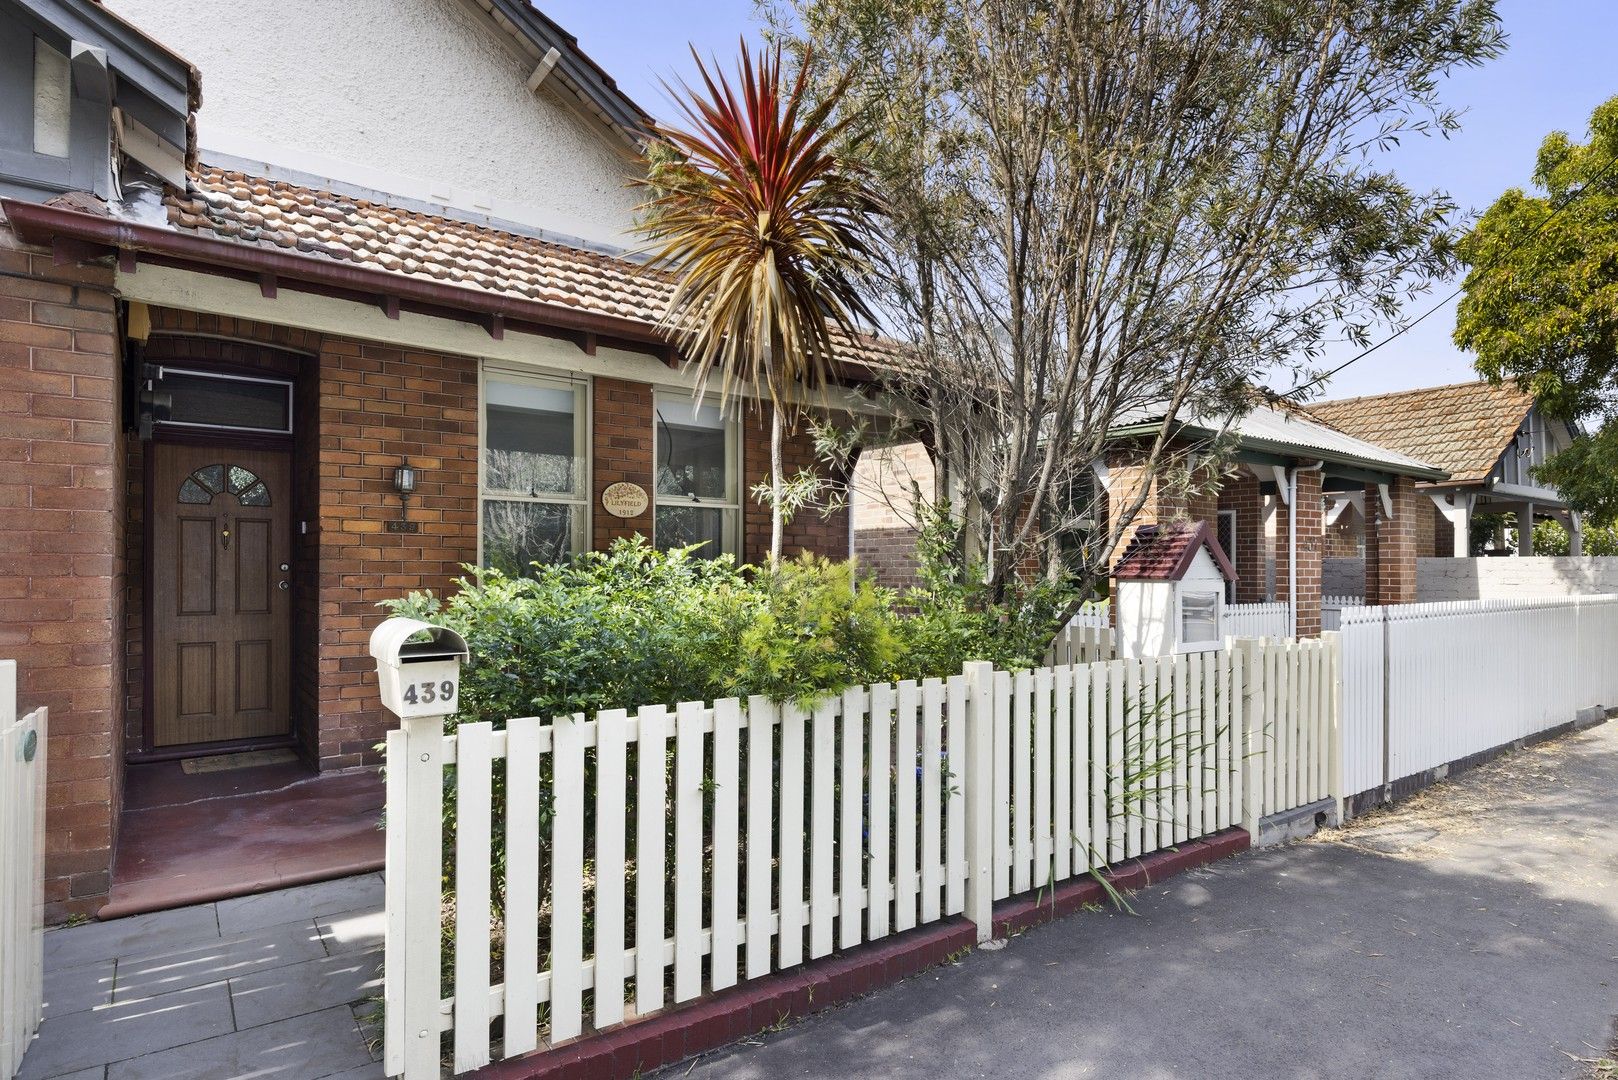 3 bedrooms House in 439 Balmain Road LILYFIELD NSW, 2040